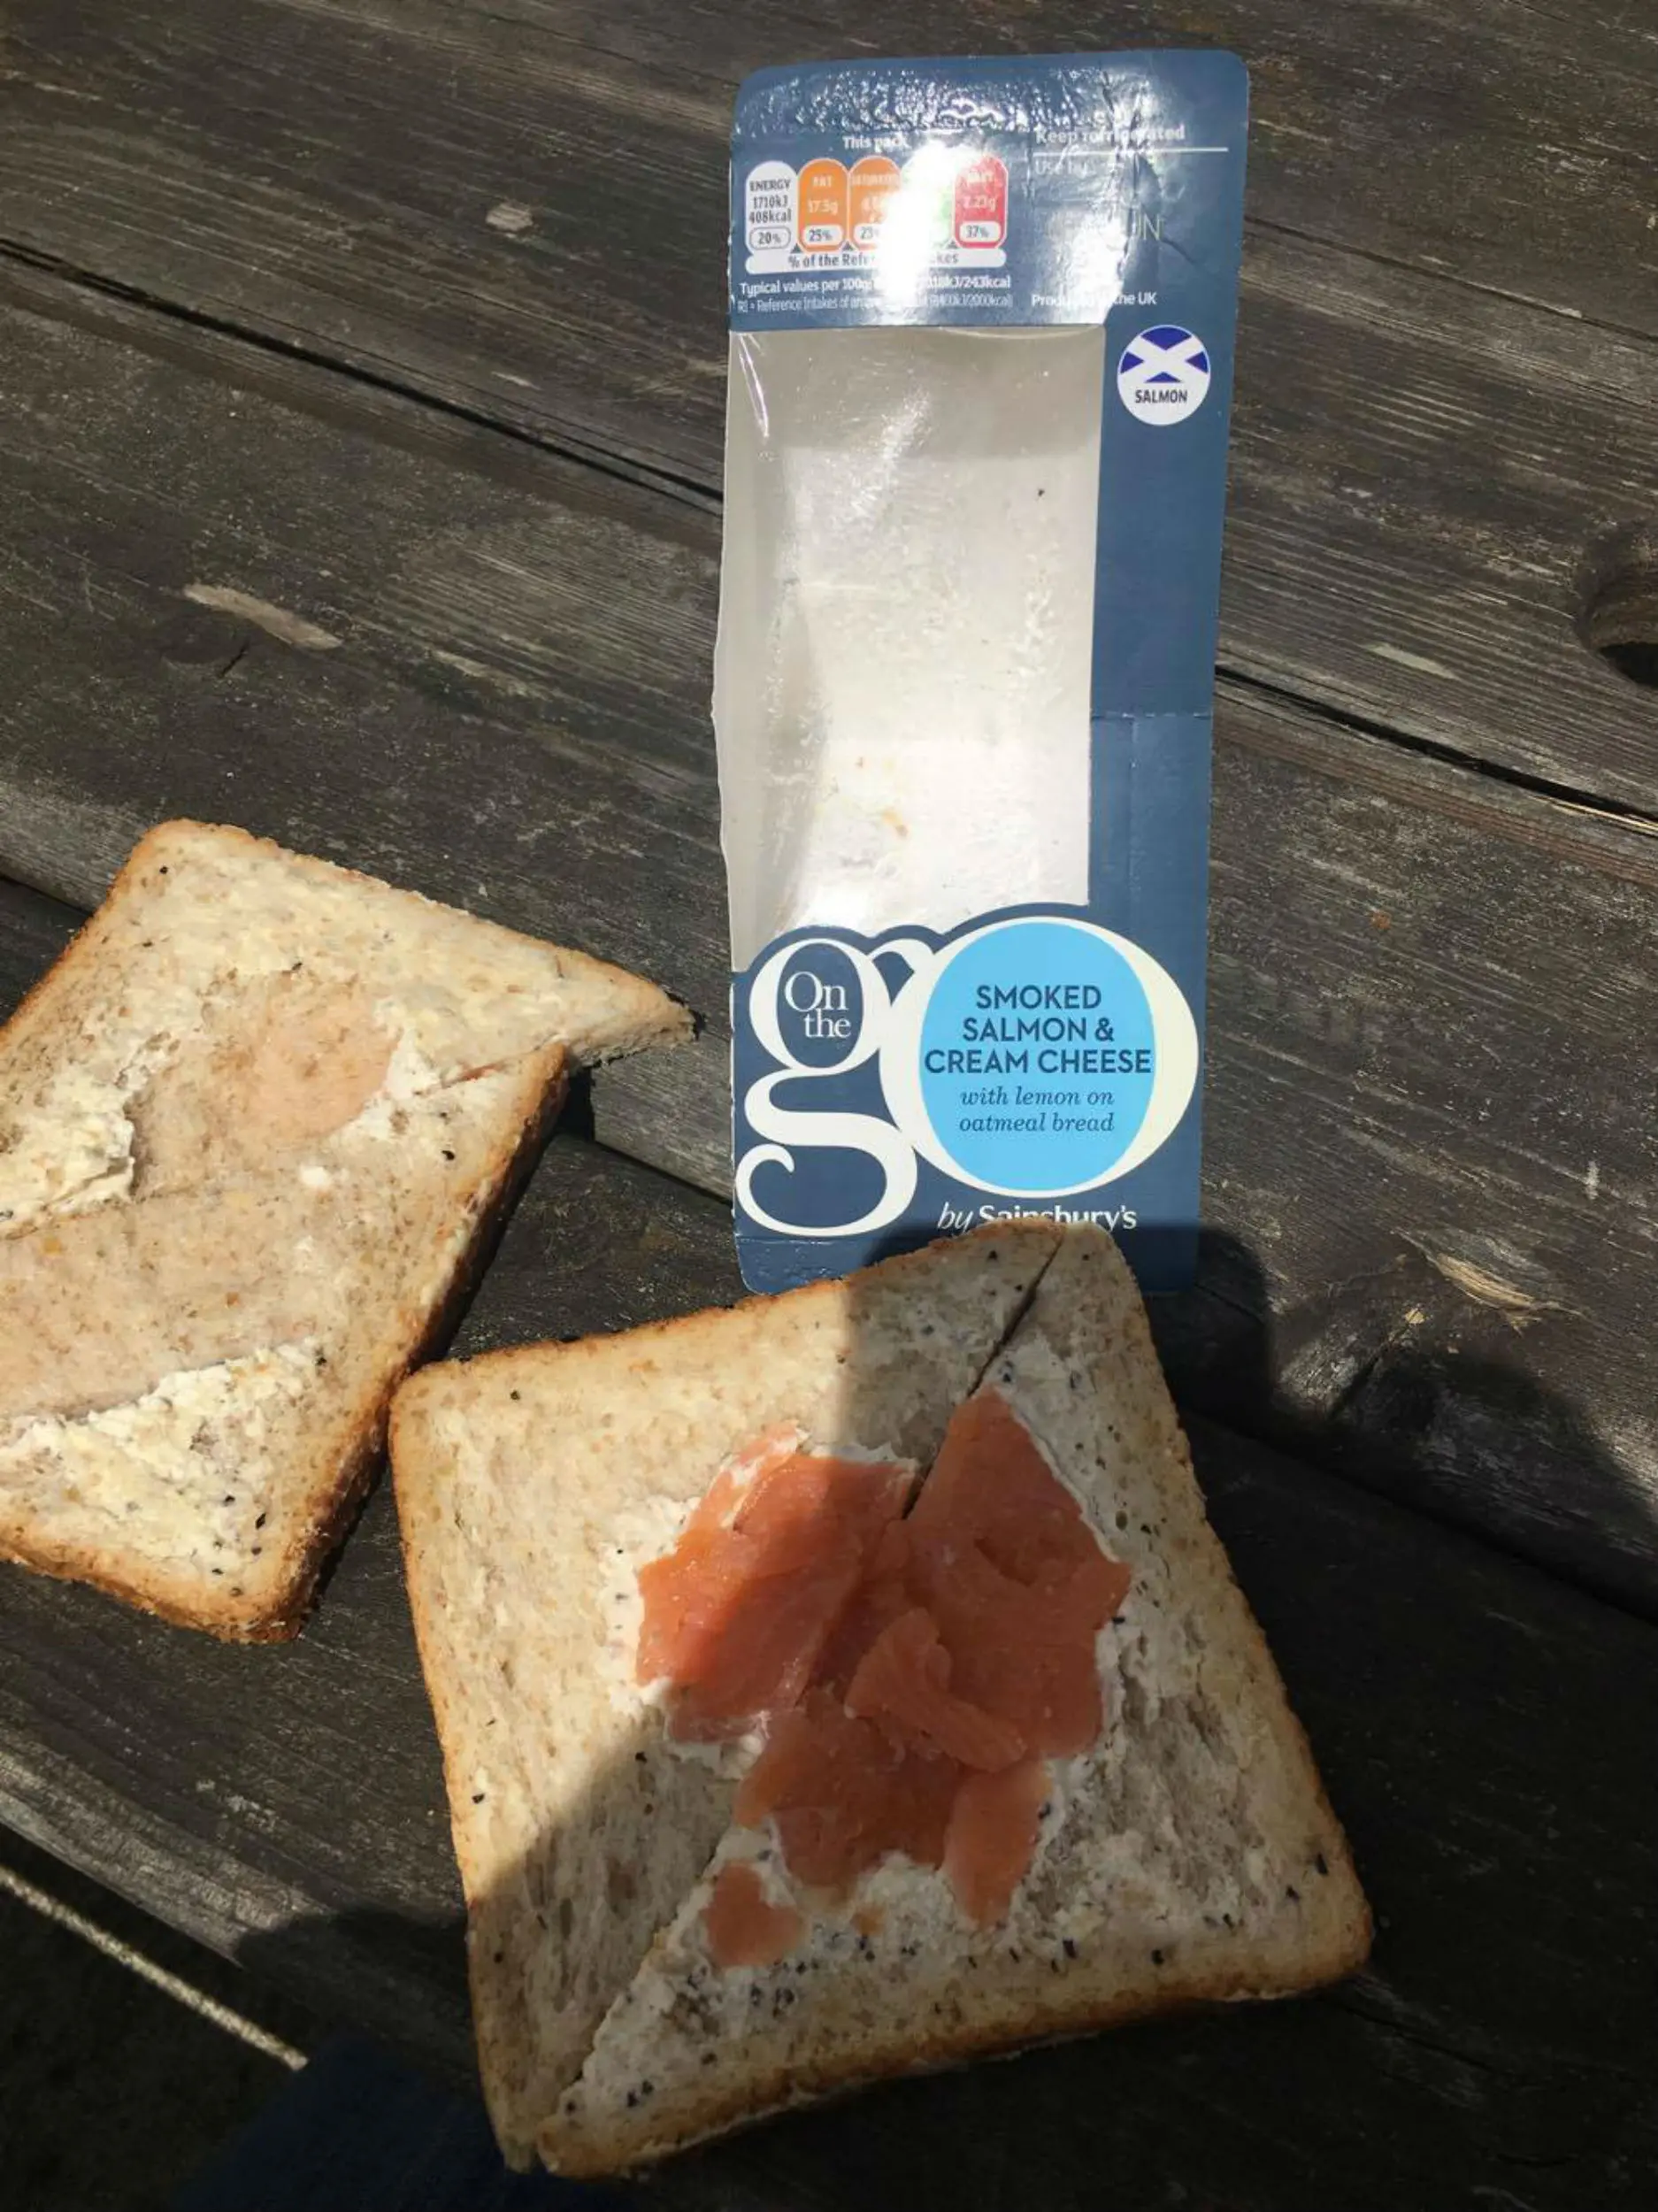 sainsbury's smoked salmon and cream cheese sandwich - Do Sainsburys sell vegan sandwiches